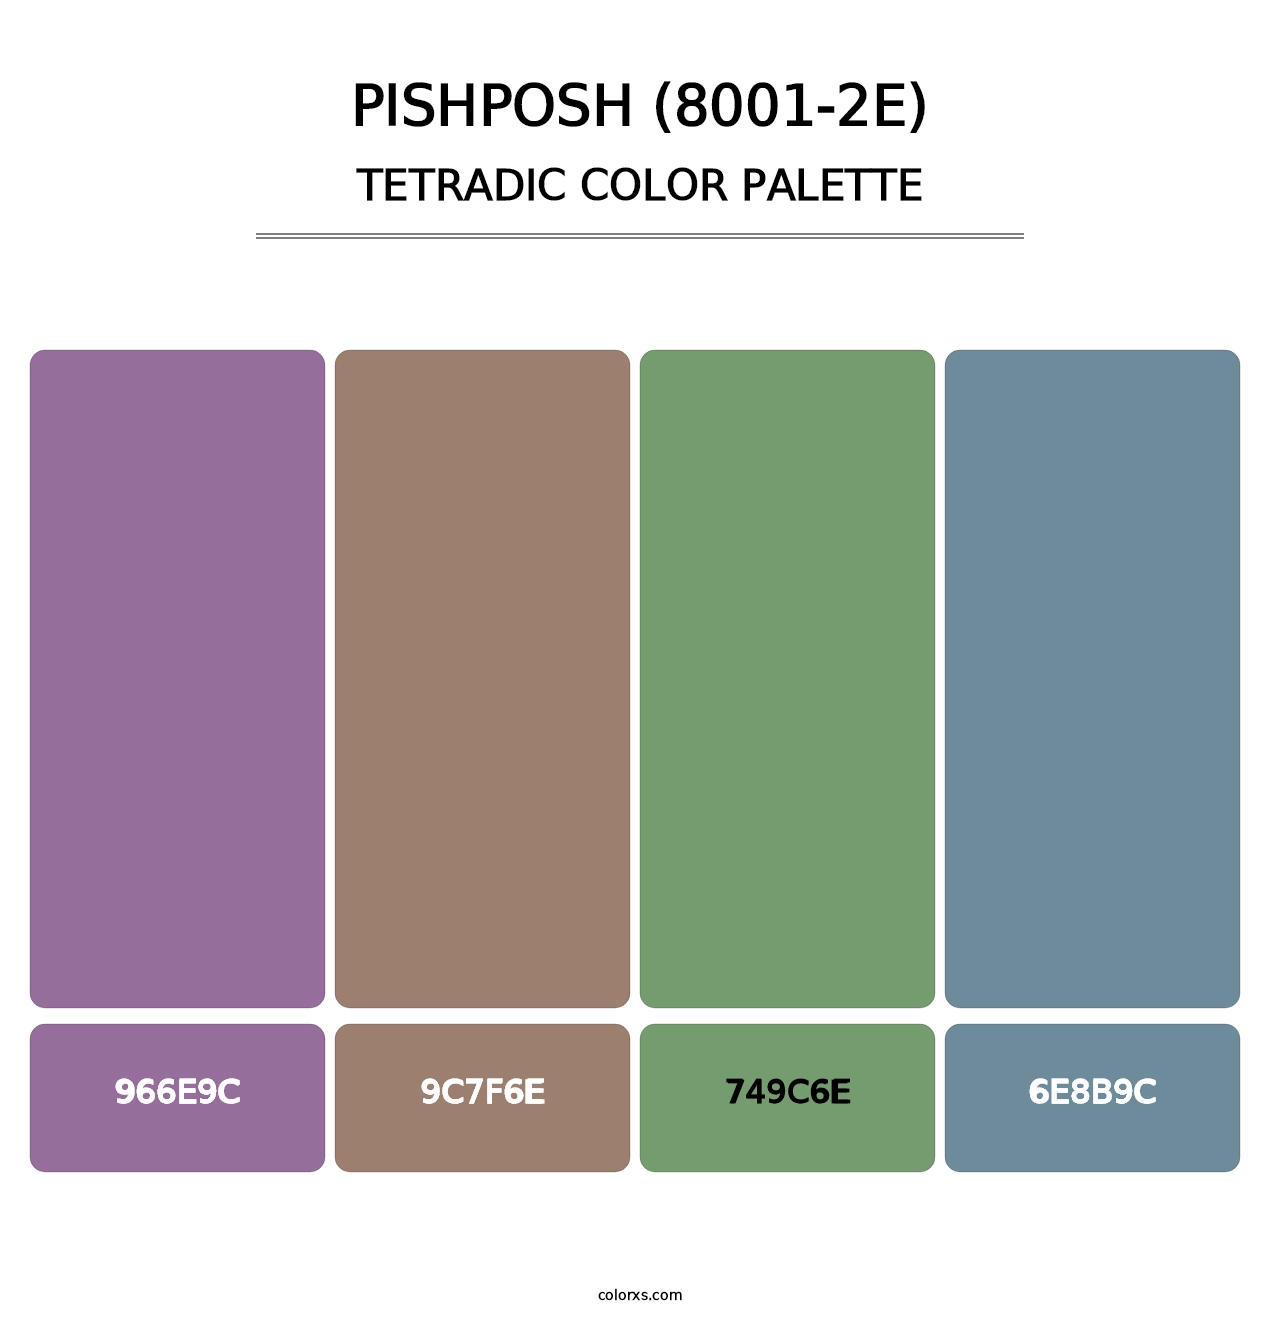 Pishposh (8001-2E) - Tetradic Color Palette